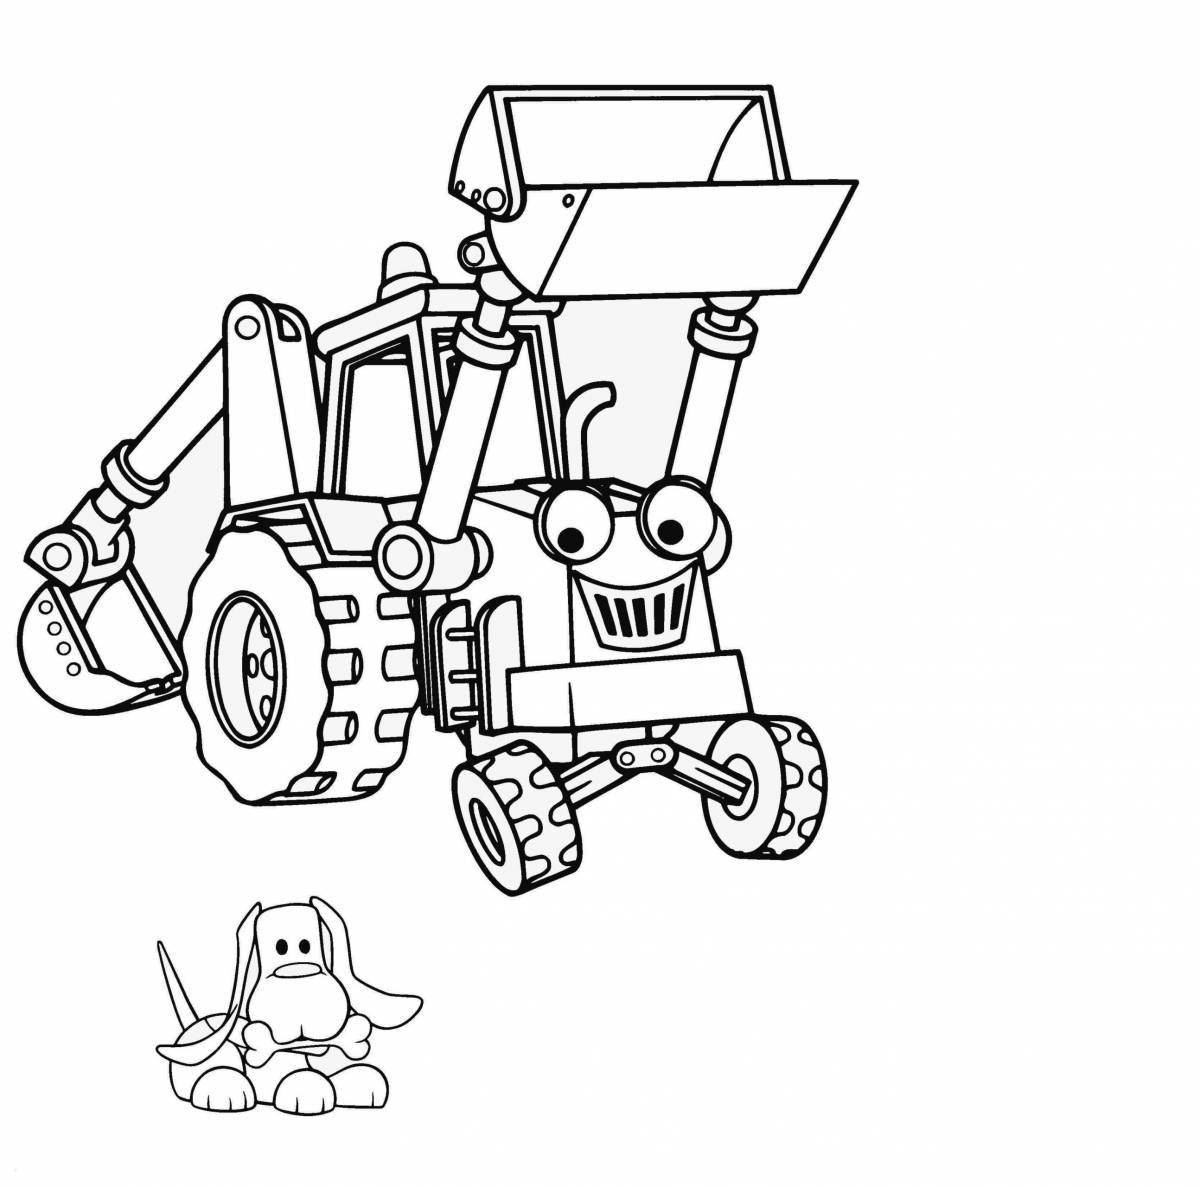 Cute tractor cartoon coloring page